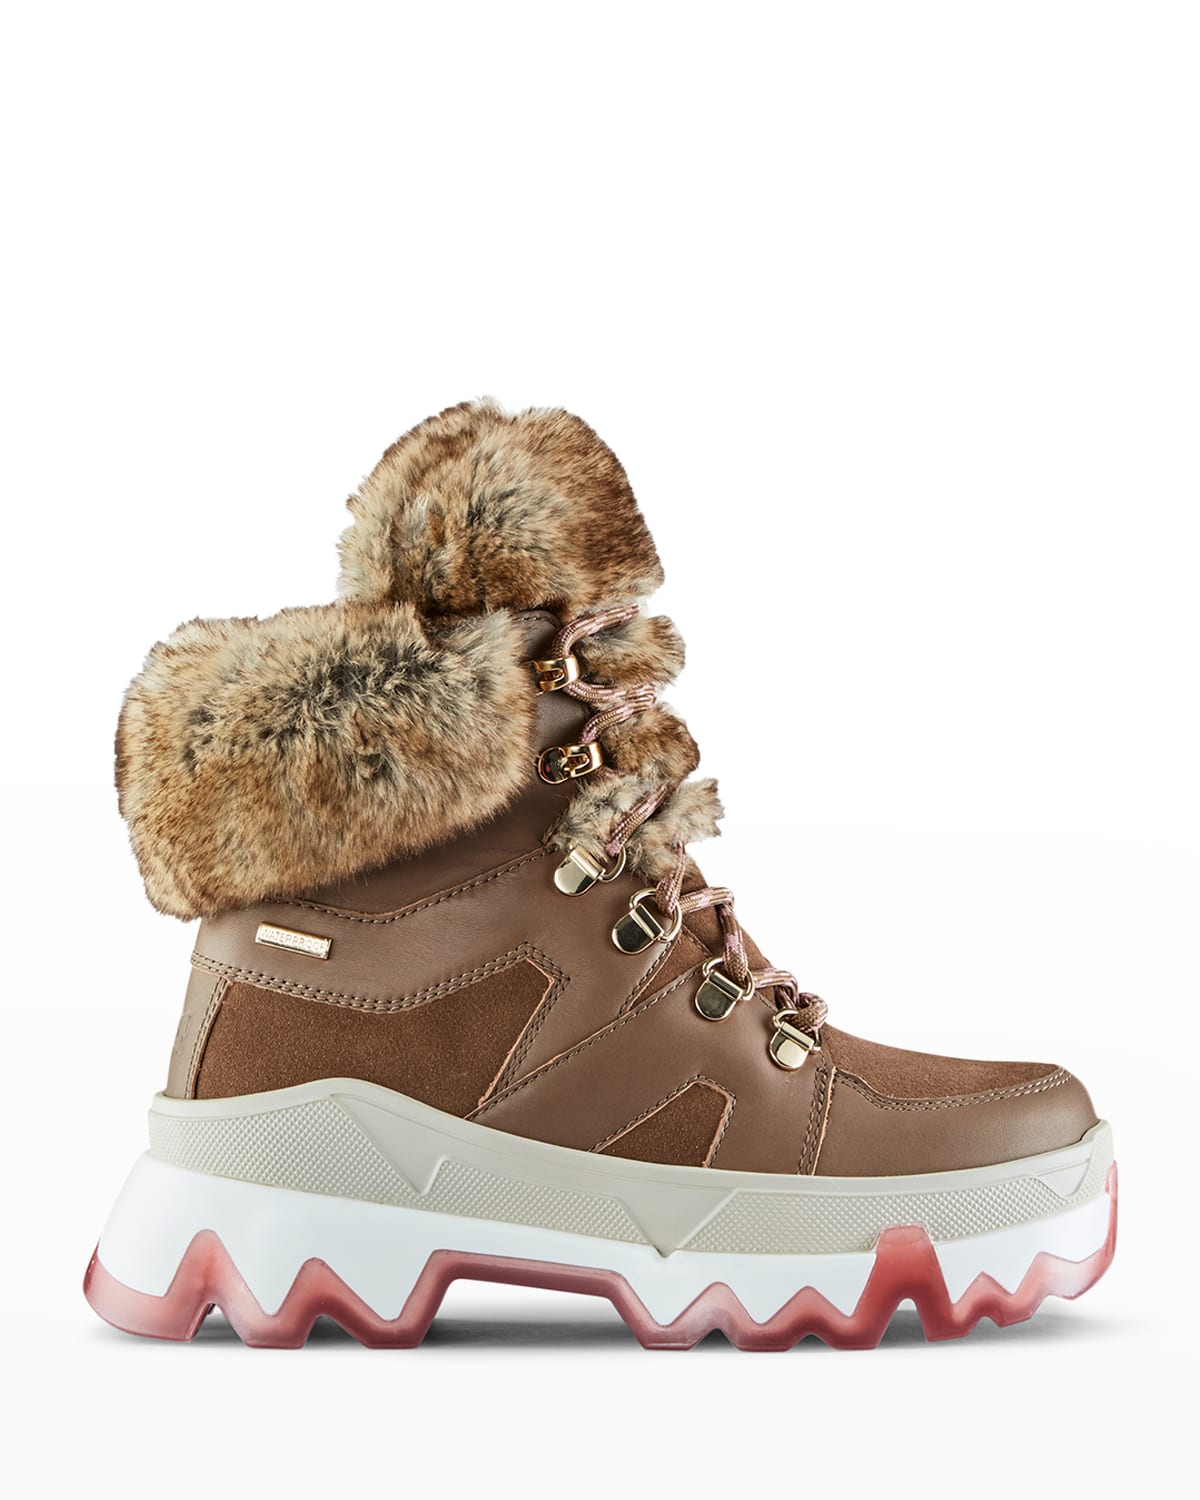 Cougar Warrior Mix-Leather Snow Boots w/ Faux-Fur Trim